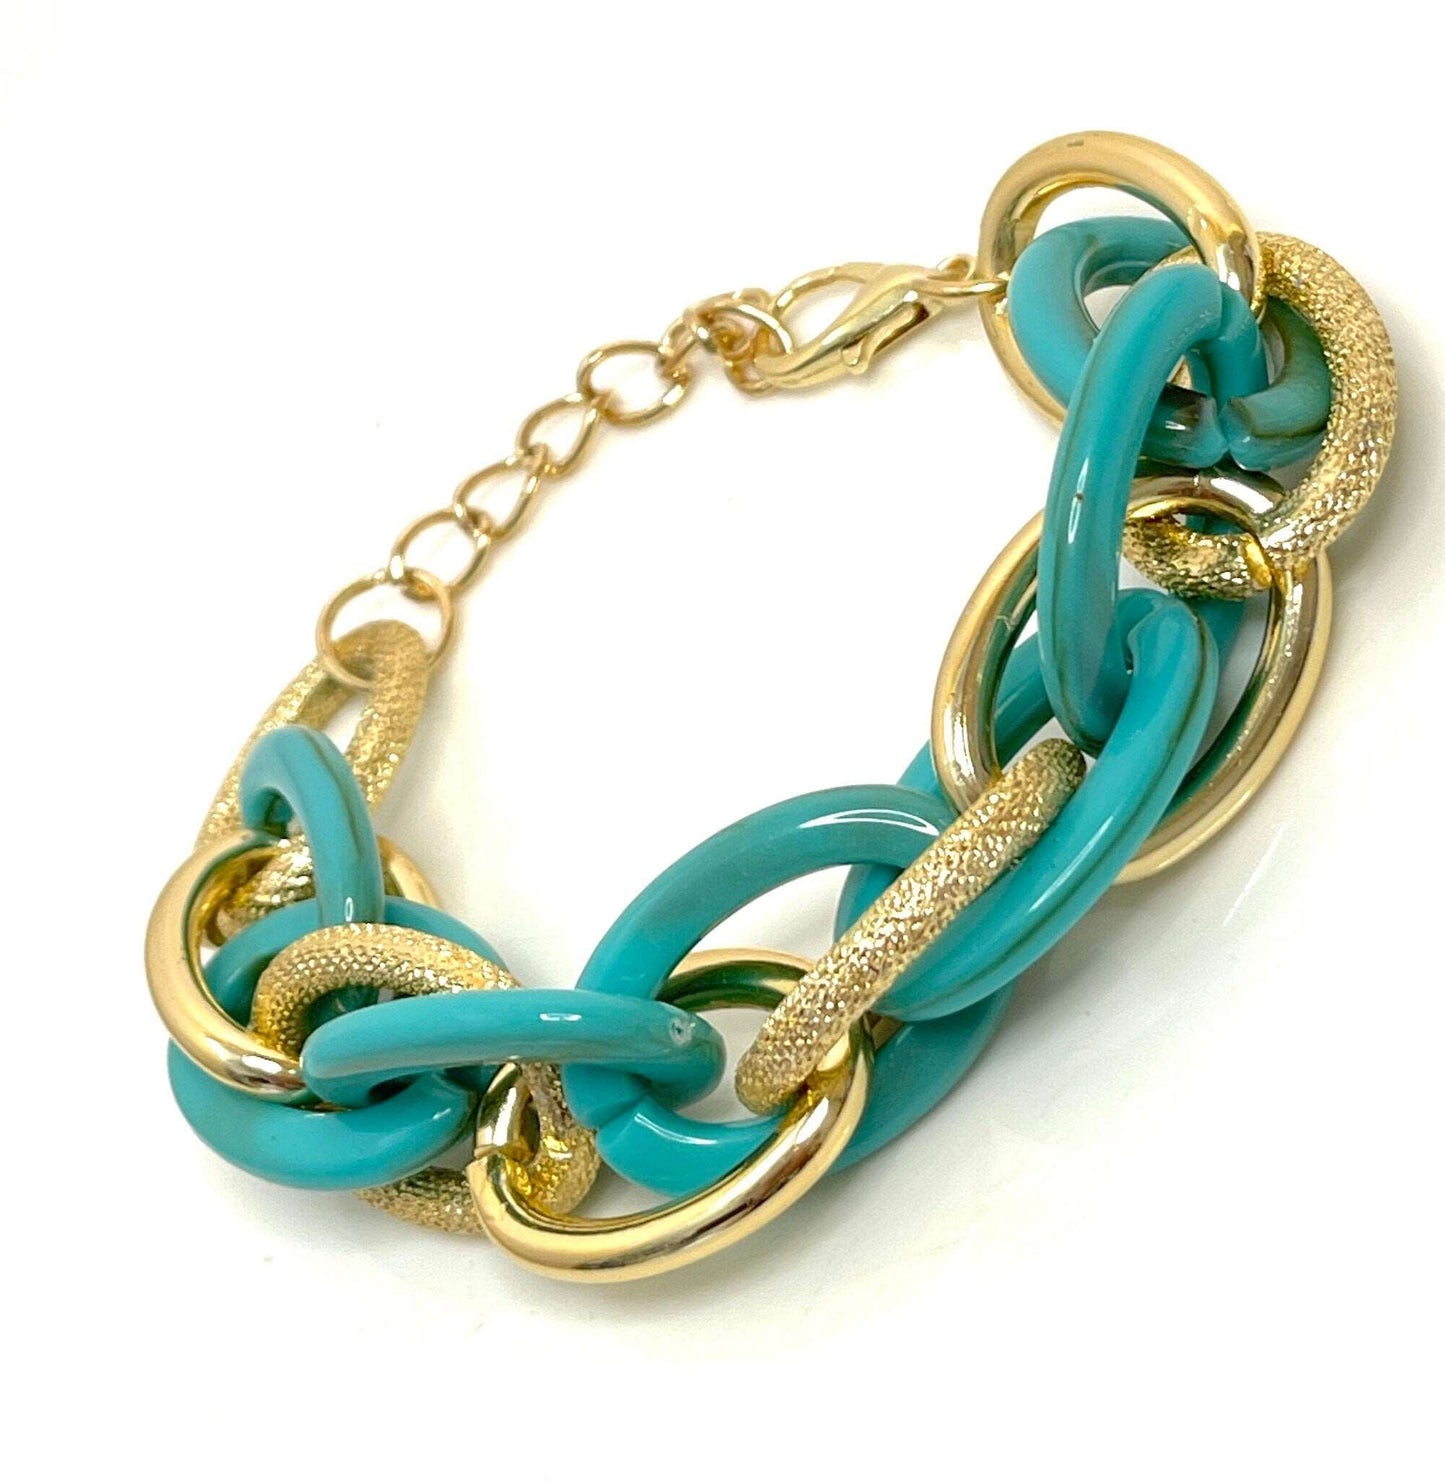 Chunky Chain Bracelet, Teal and Gold, Statement Bracelet, Textured Jewellery, Retro Acrylic Jewellery, Bracelets for Women